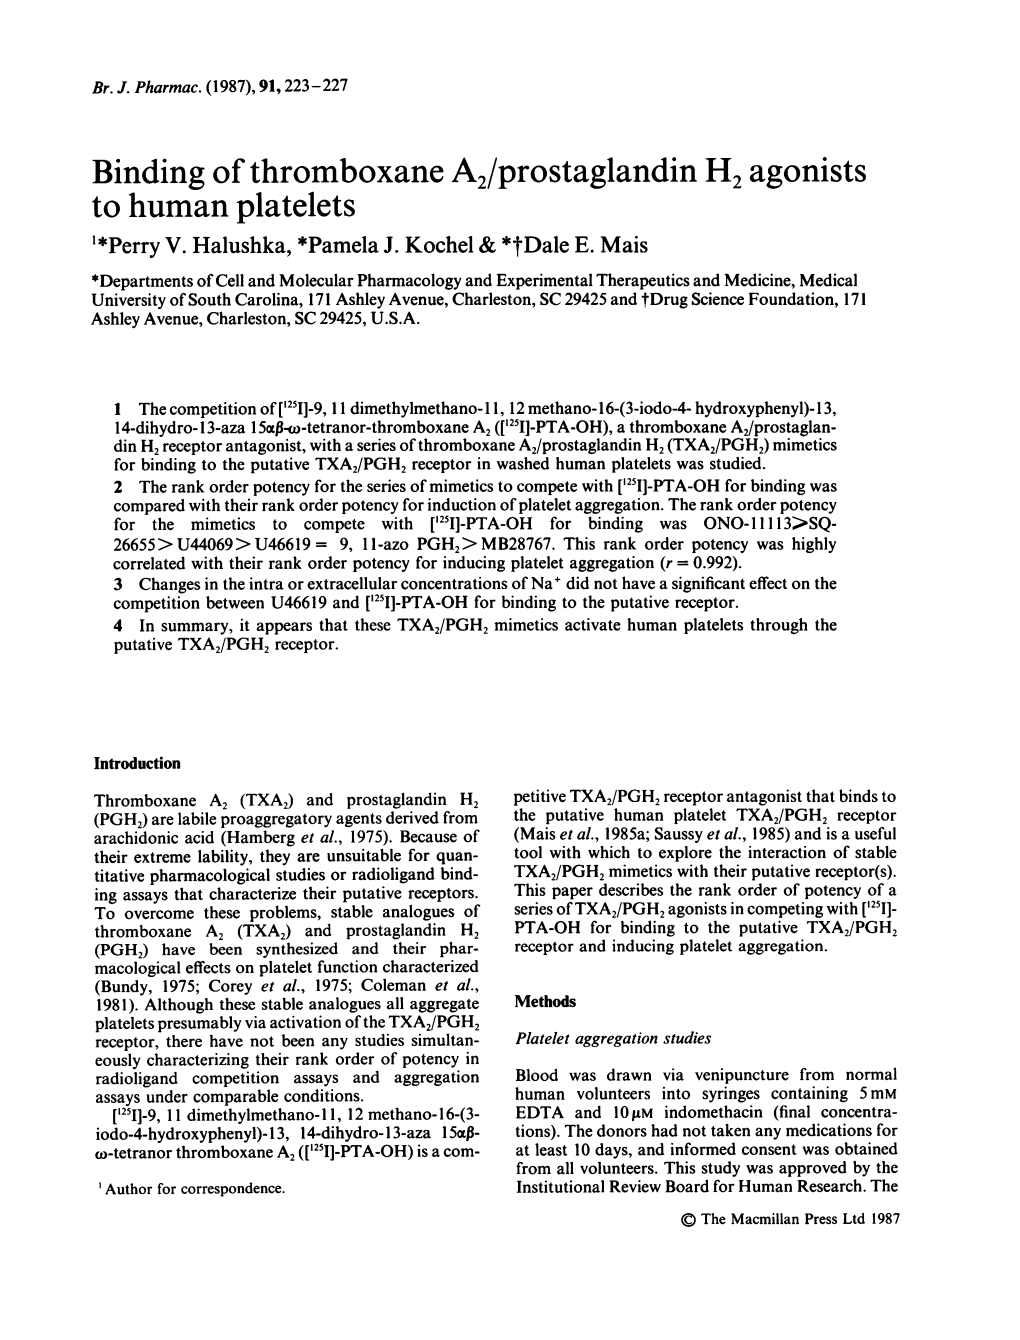 Binding of Thromboxane A2/Prostaglandin H2